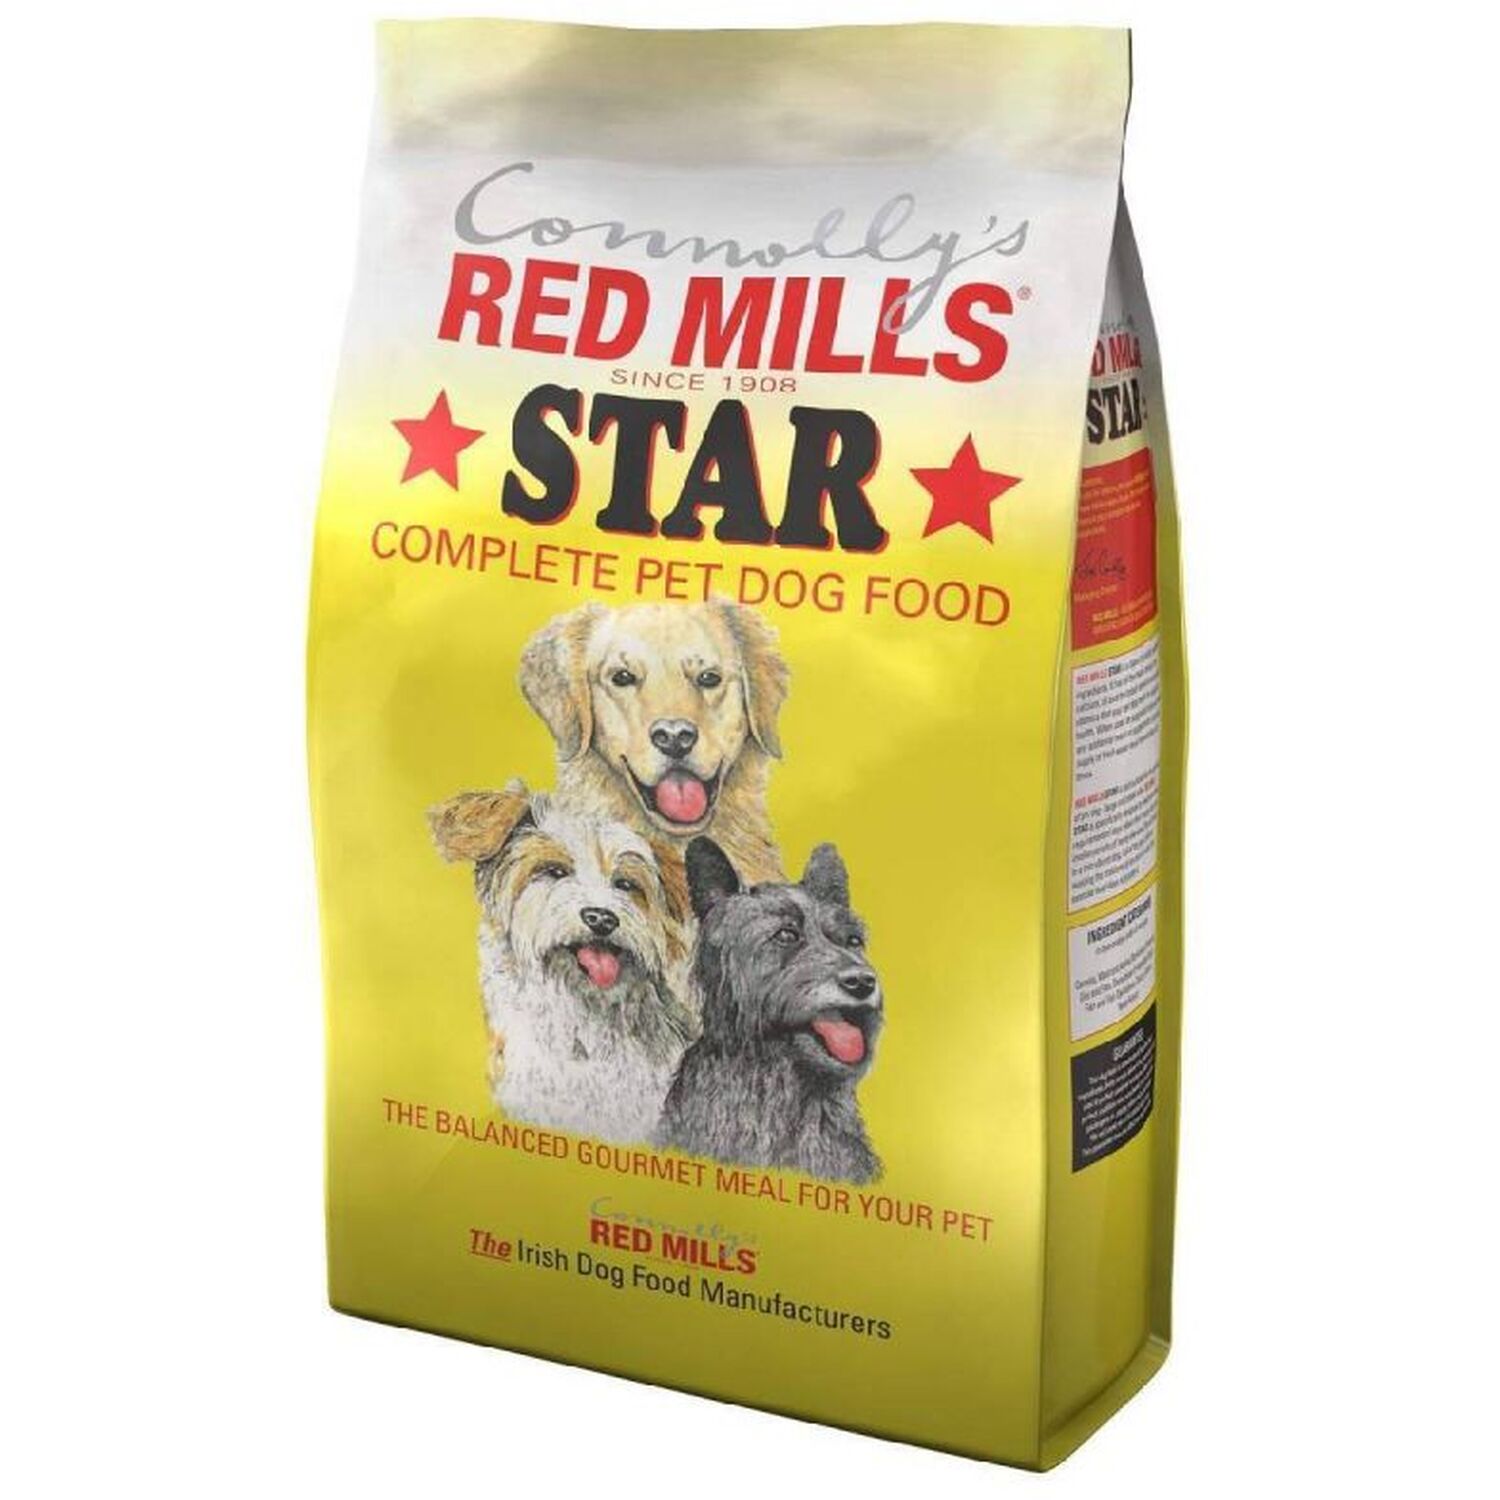 Red Mills Star Complete Dog Food Image